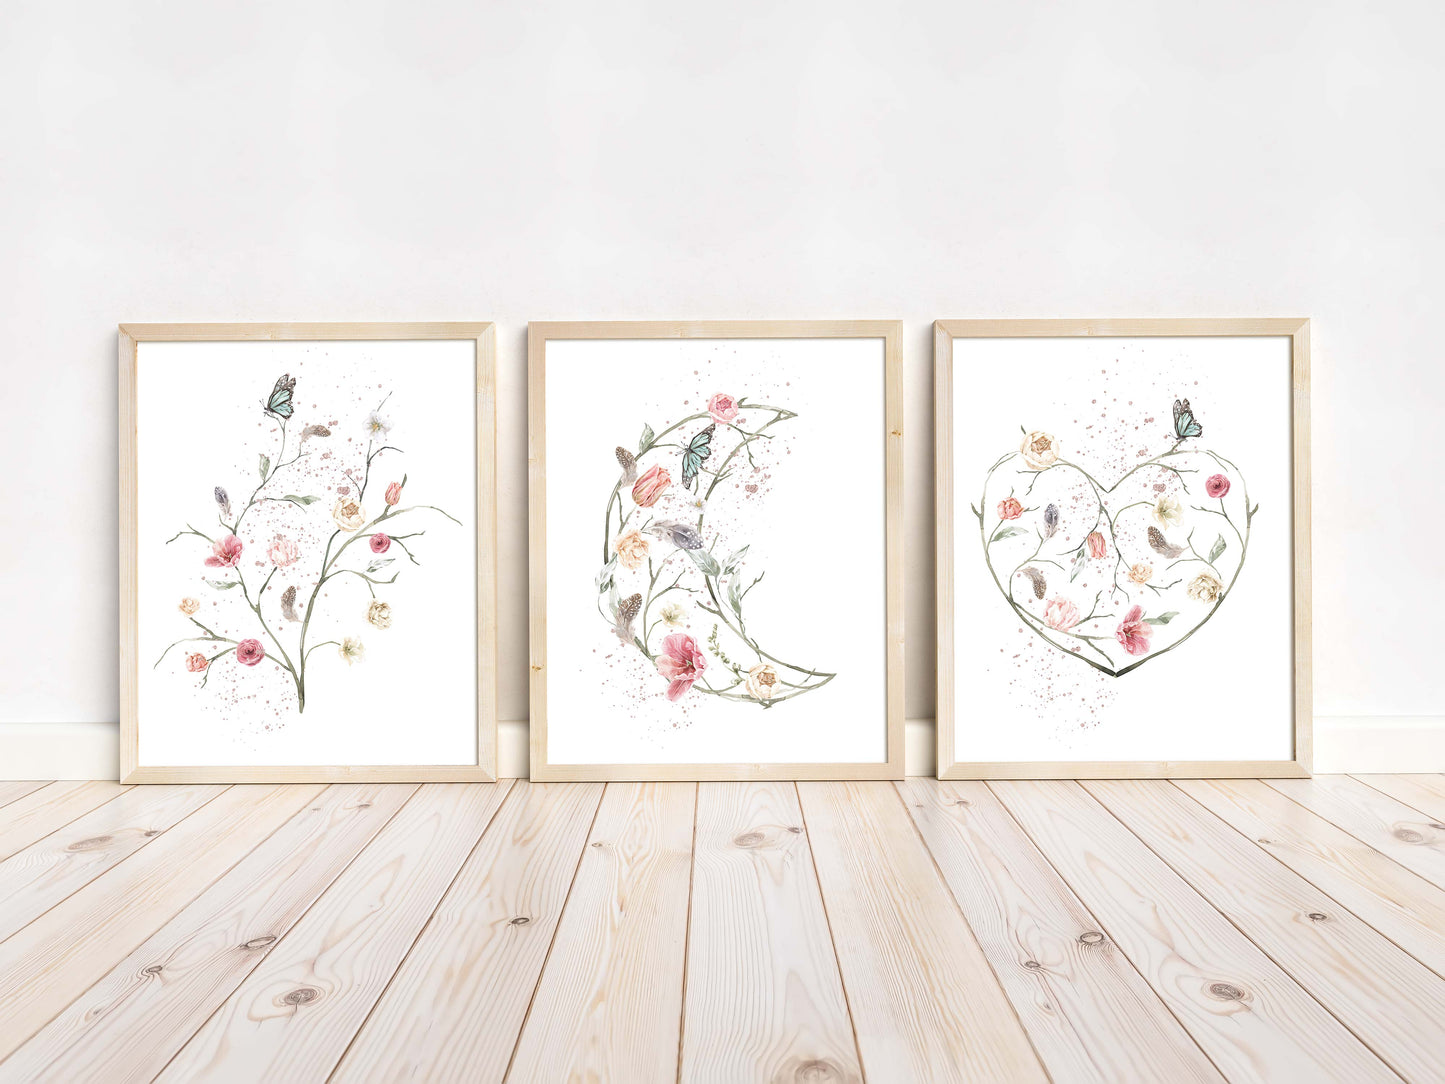 Boho Wall Art, Floral Nursery Prints - set of 3